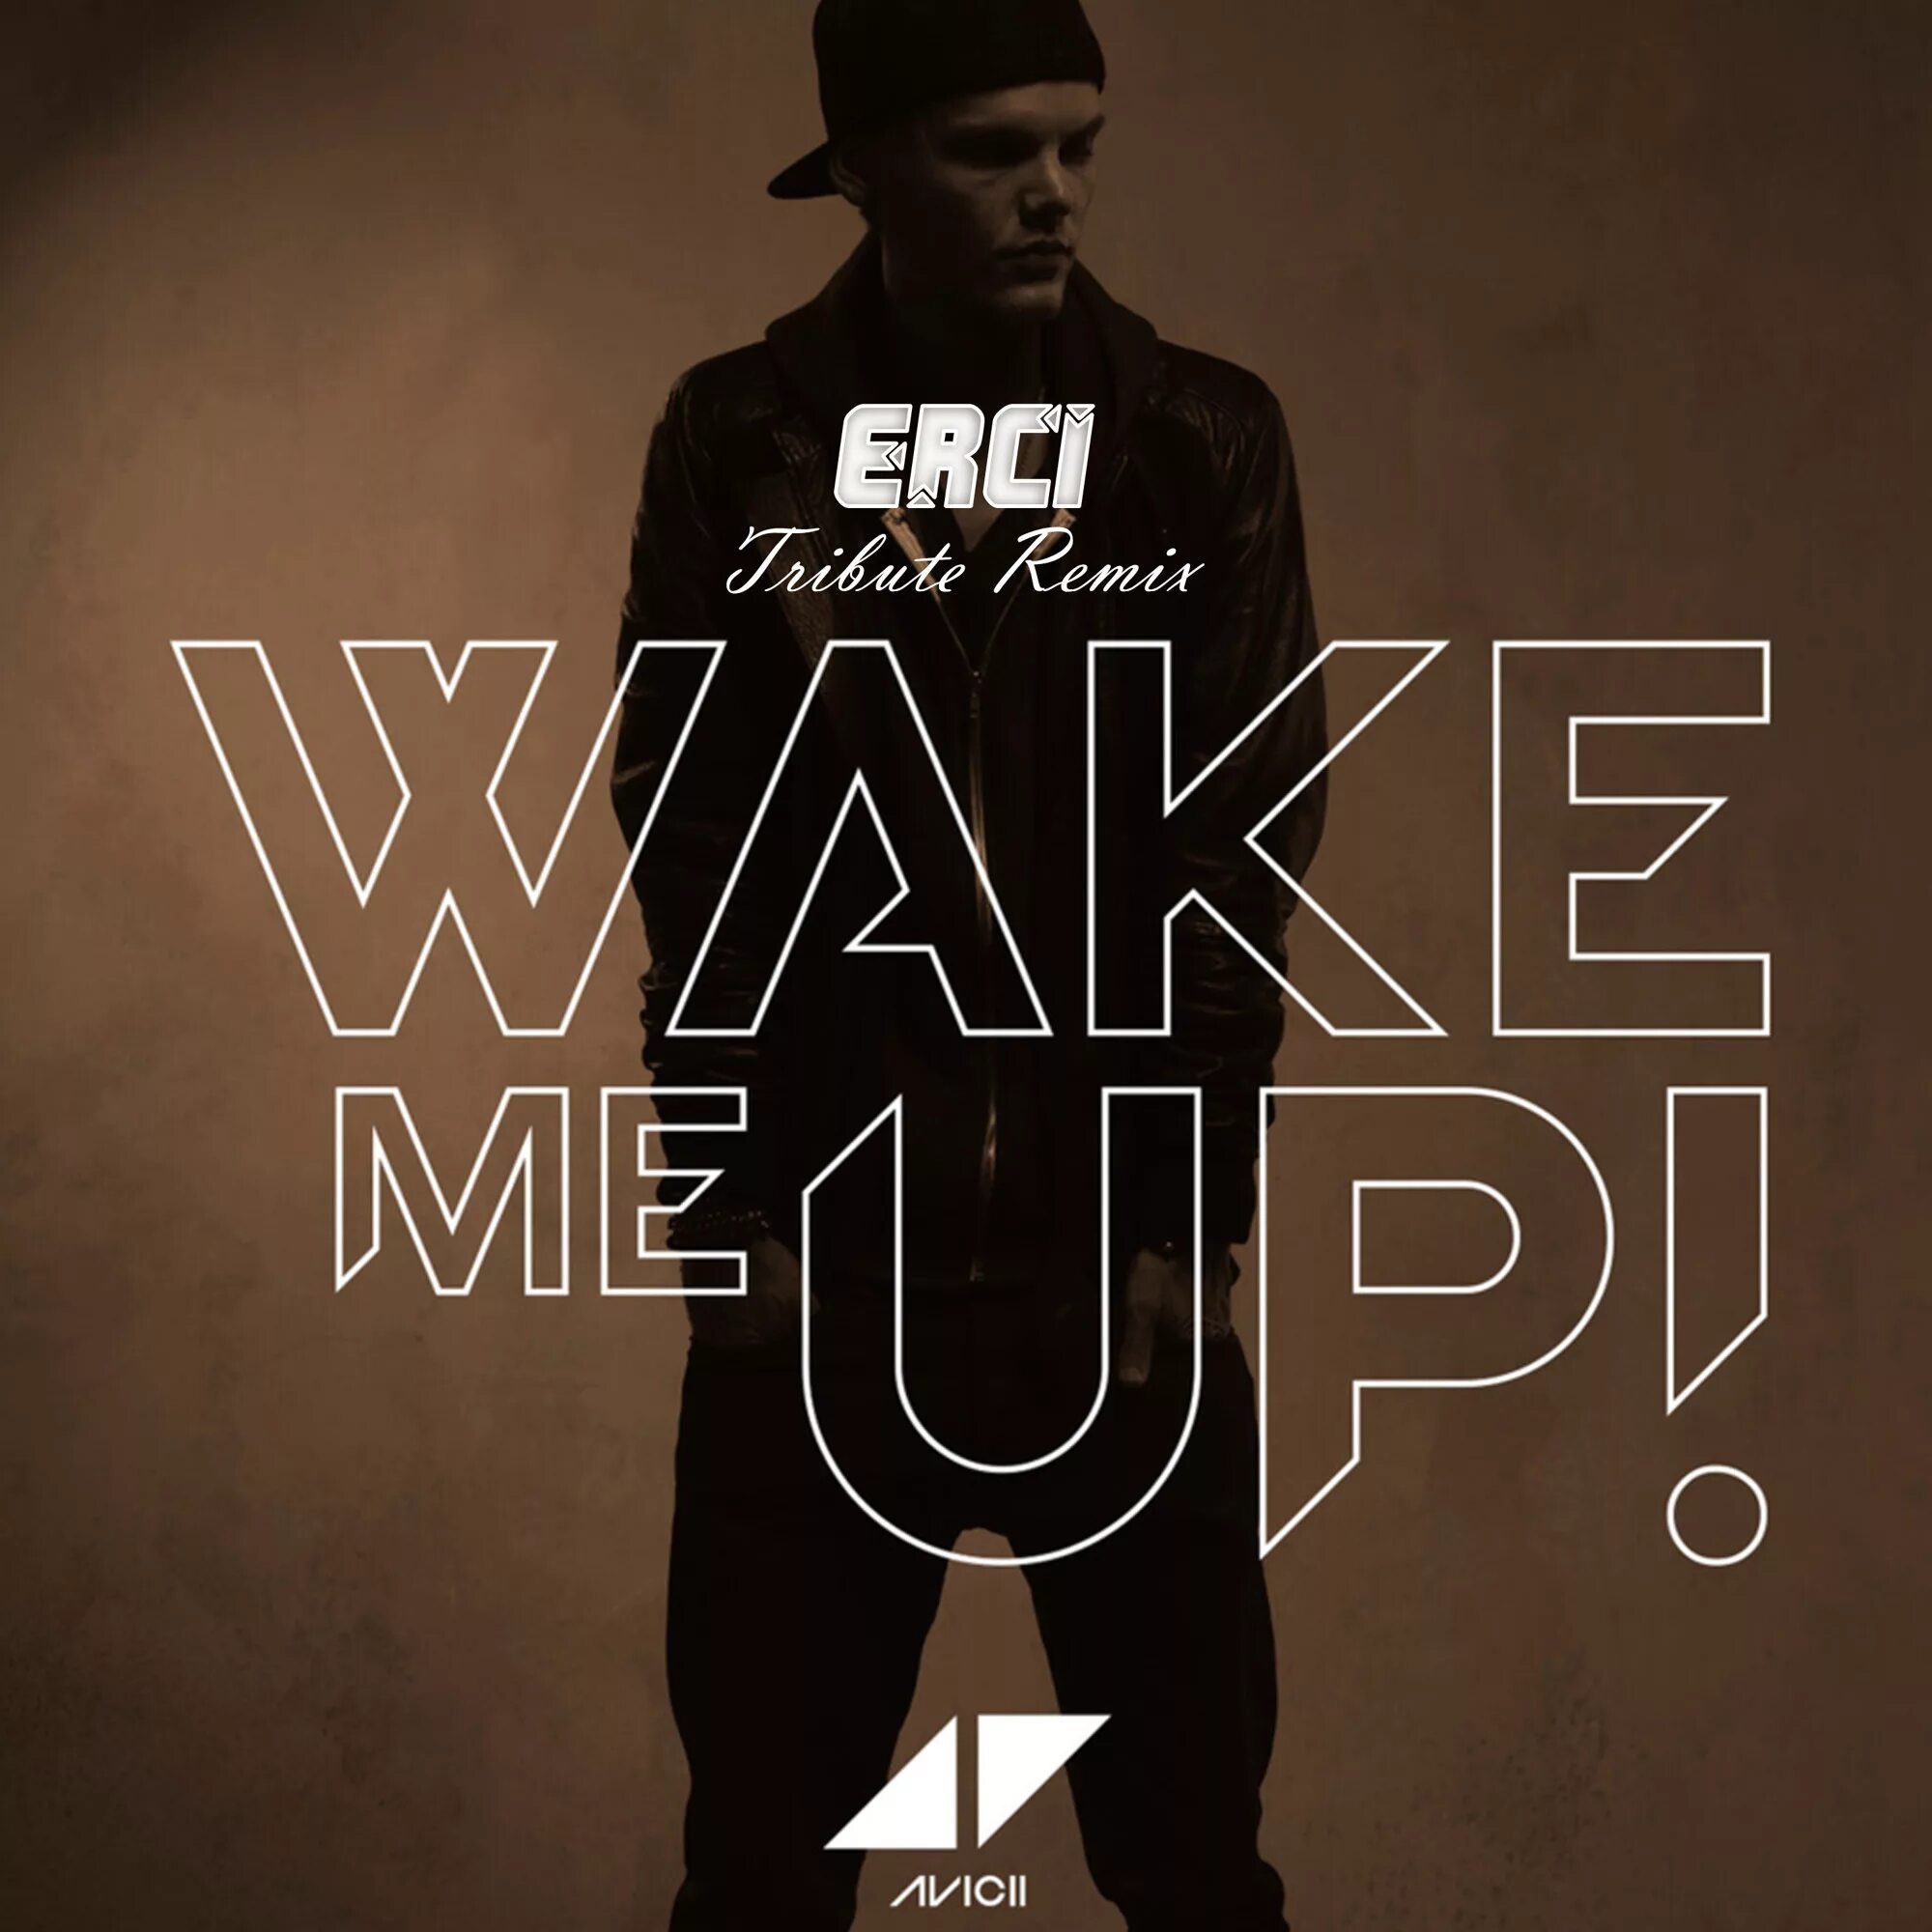 Avicii Wake me up. Wake me up Авичи. Wake me up Avicii альбом. Avicii feat. Aloe Blacc - Wake me up.